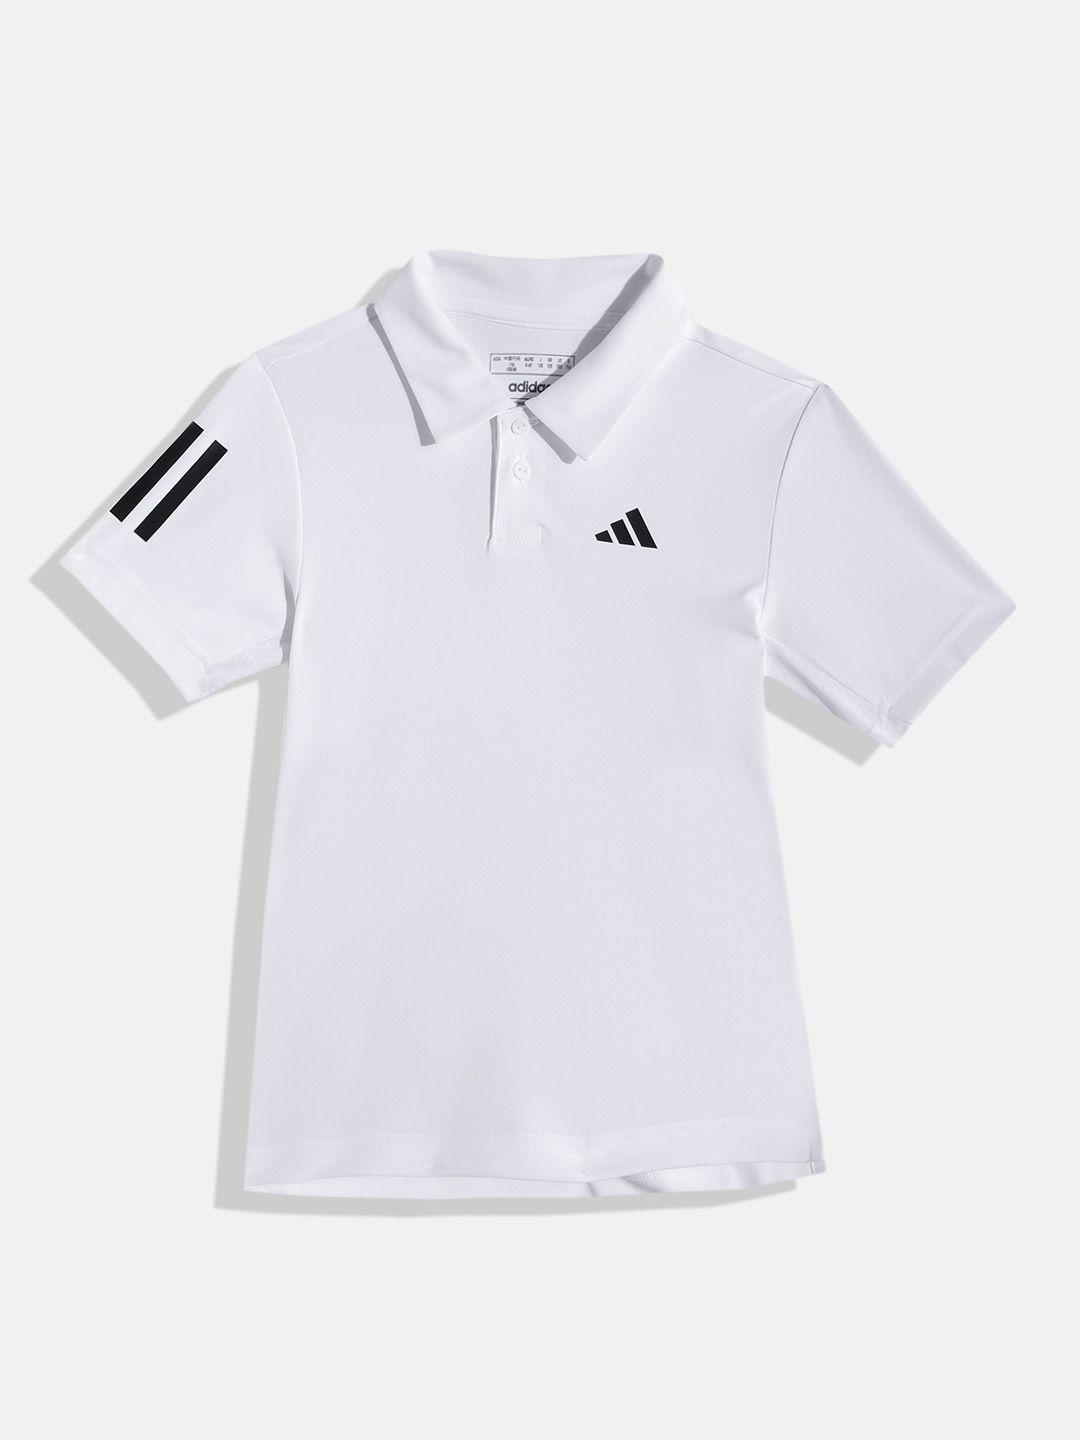 adidas boys club 3s polo collar aeroready tennis t-shirt